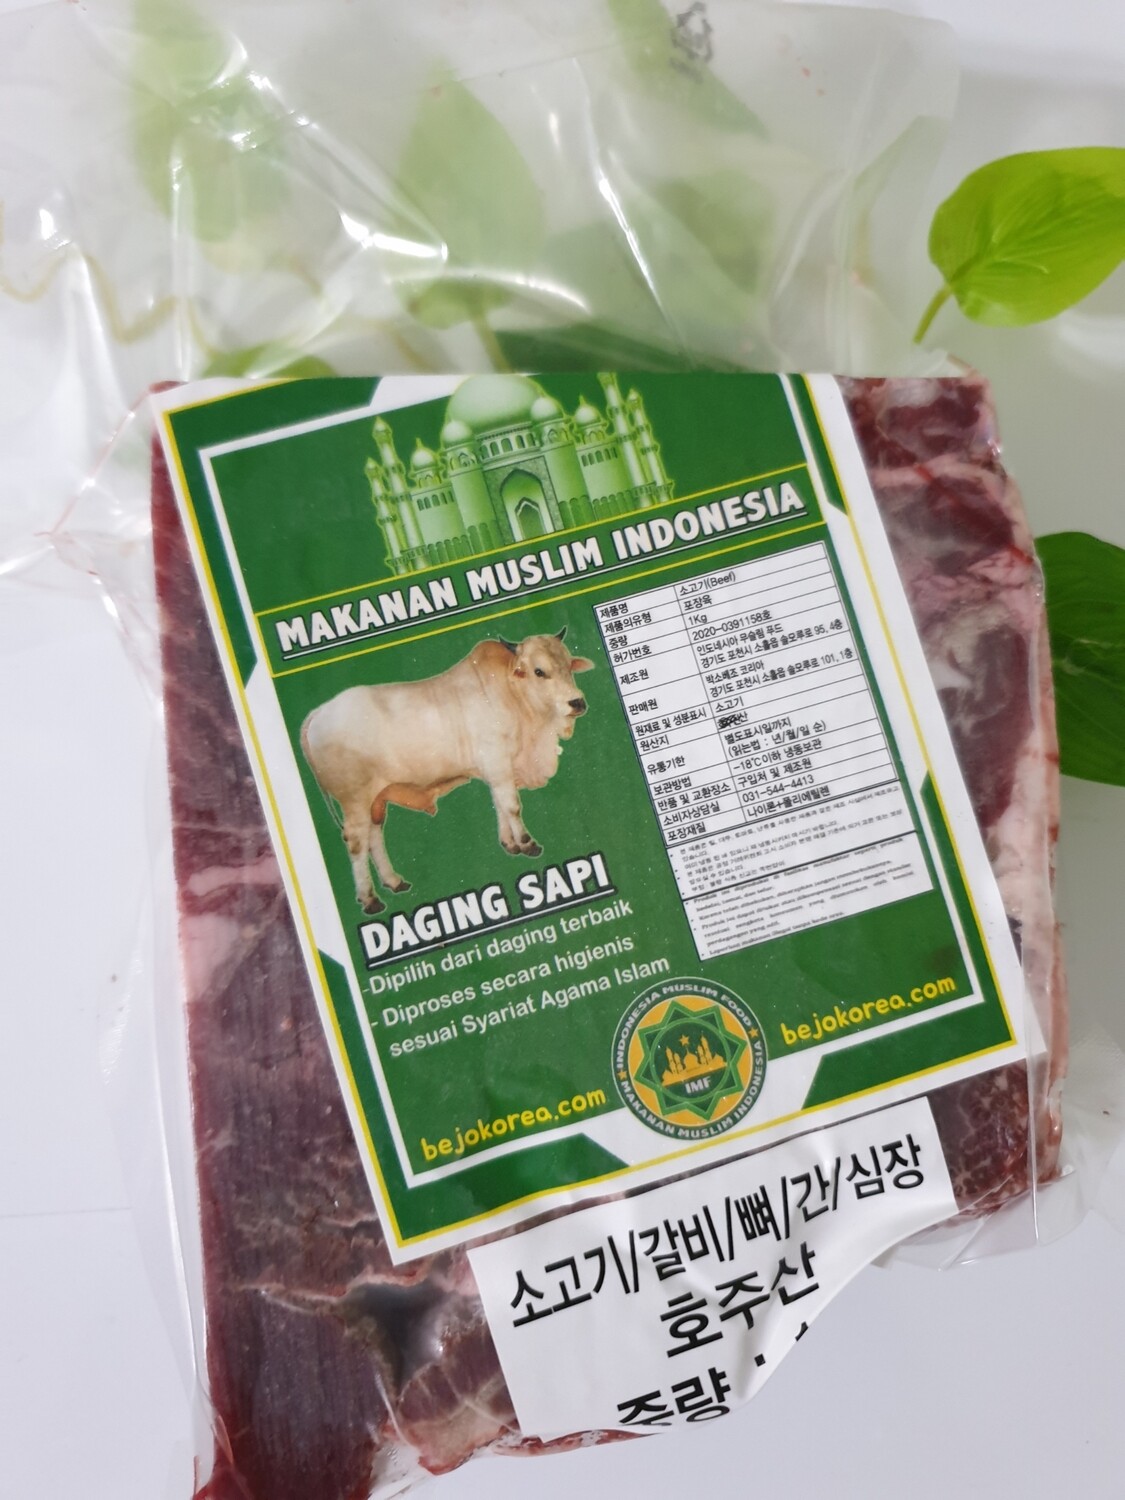 Daging kepala sapi (halal)